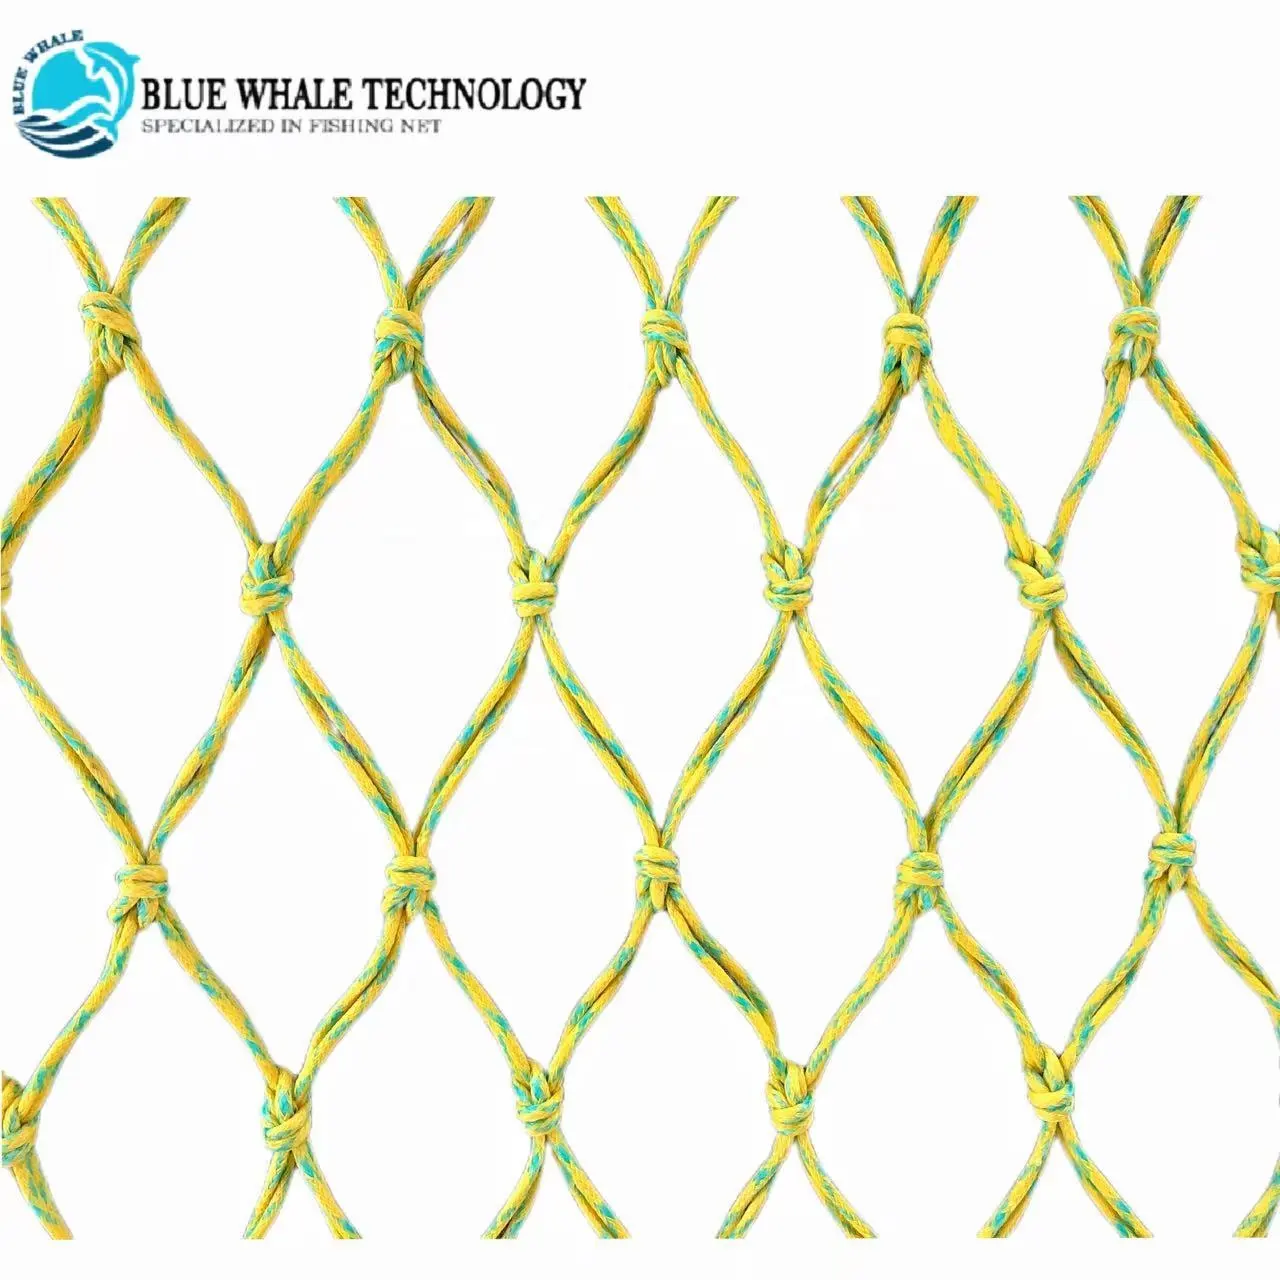 Best Selling High Performance Polyethylene Biaided Fishing Net